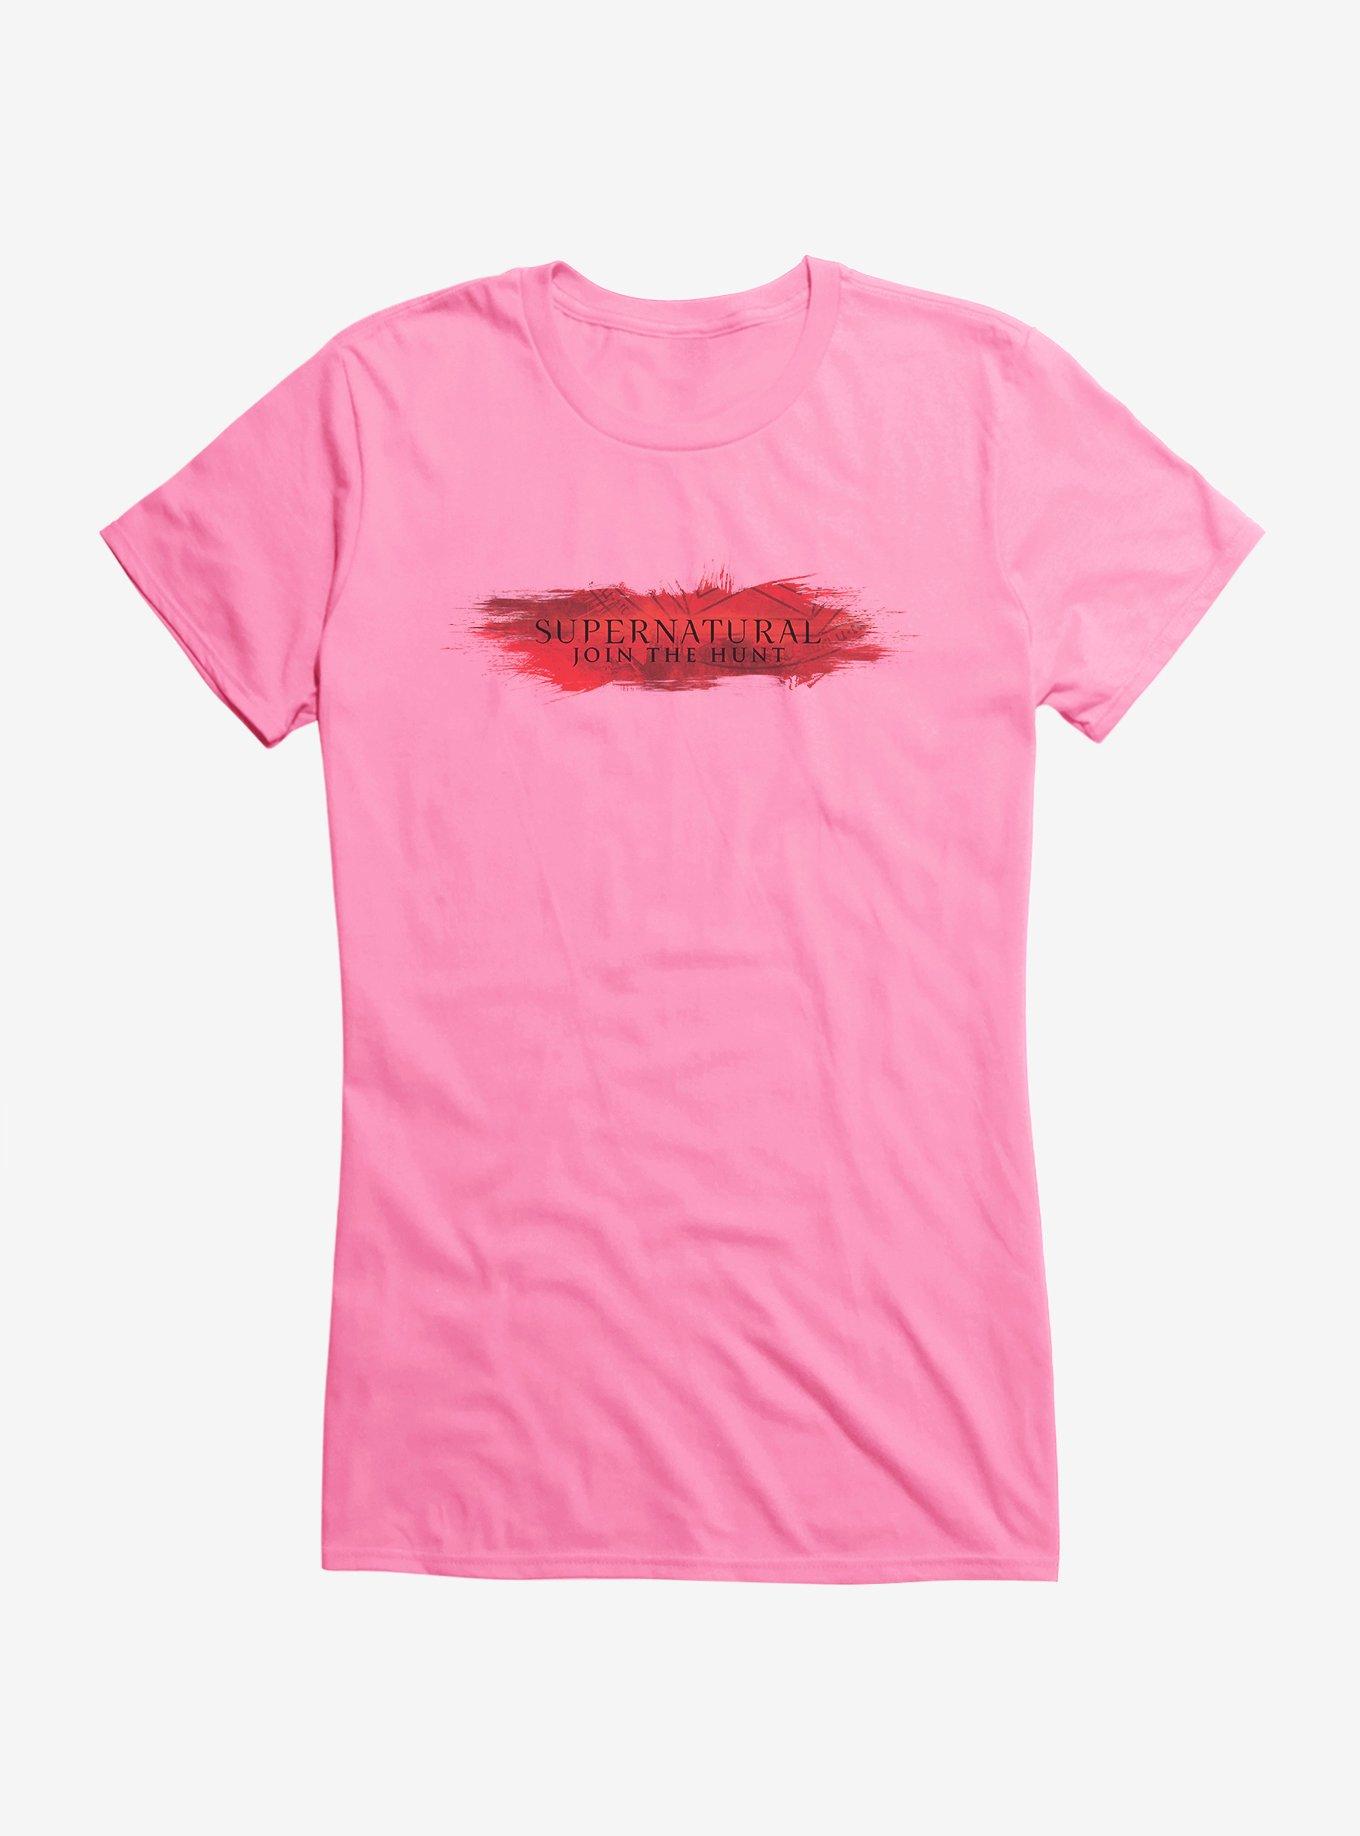 Supernatural Red Logo Girls T-Shirt, CHARITY PINK, hi-res